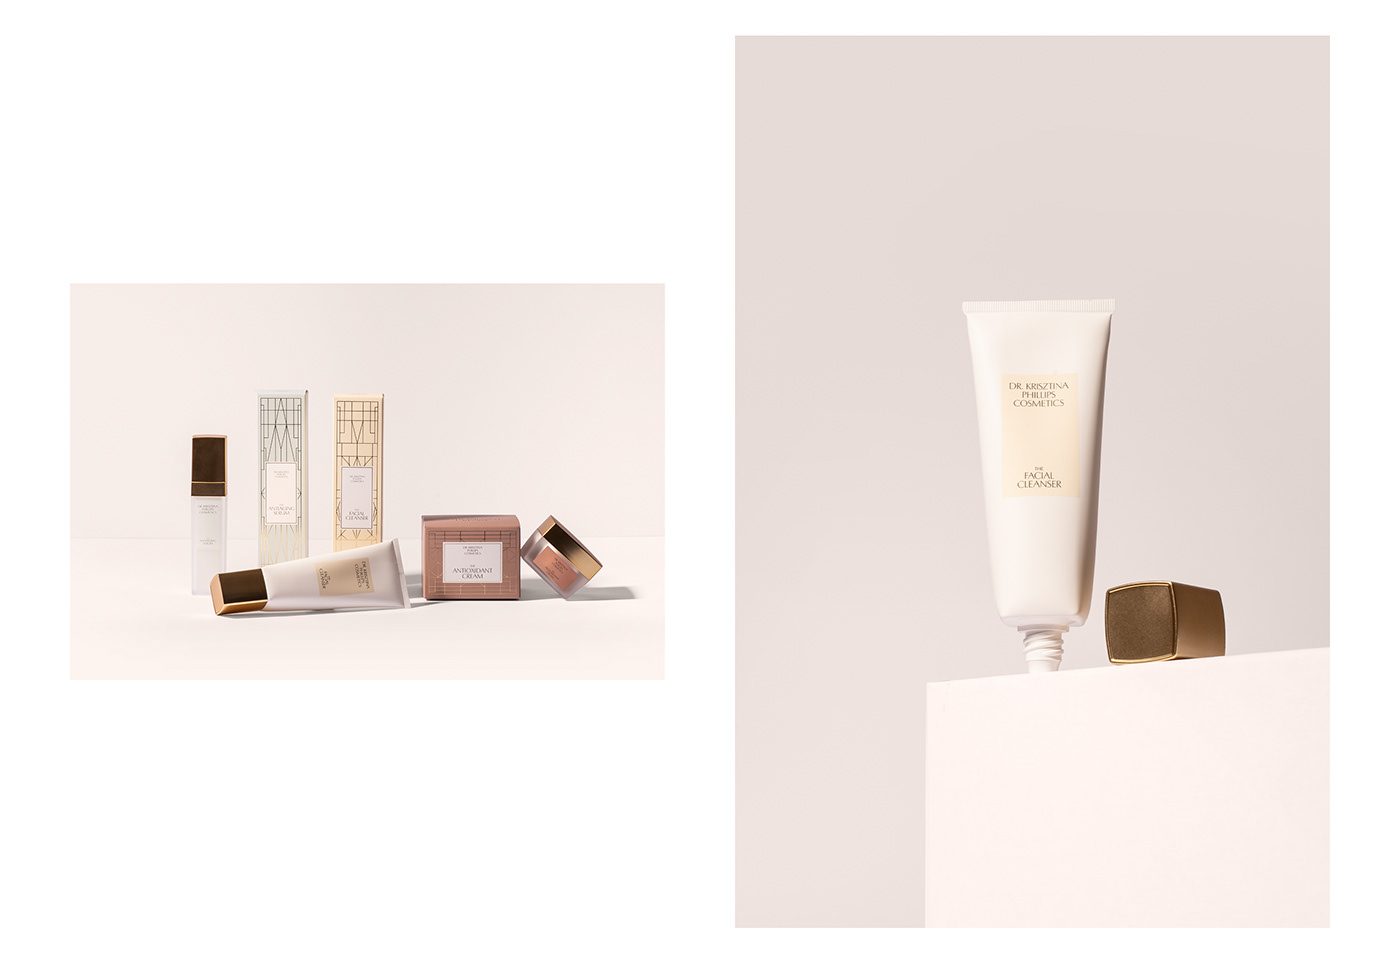 cosmetics Packaging serum cream skincare beauty ANTIAGING botox dermatology visual identity